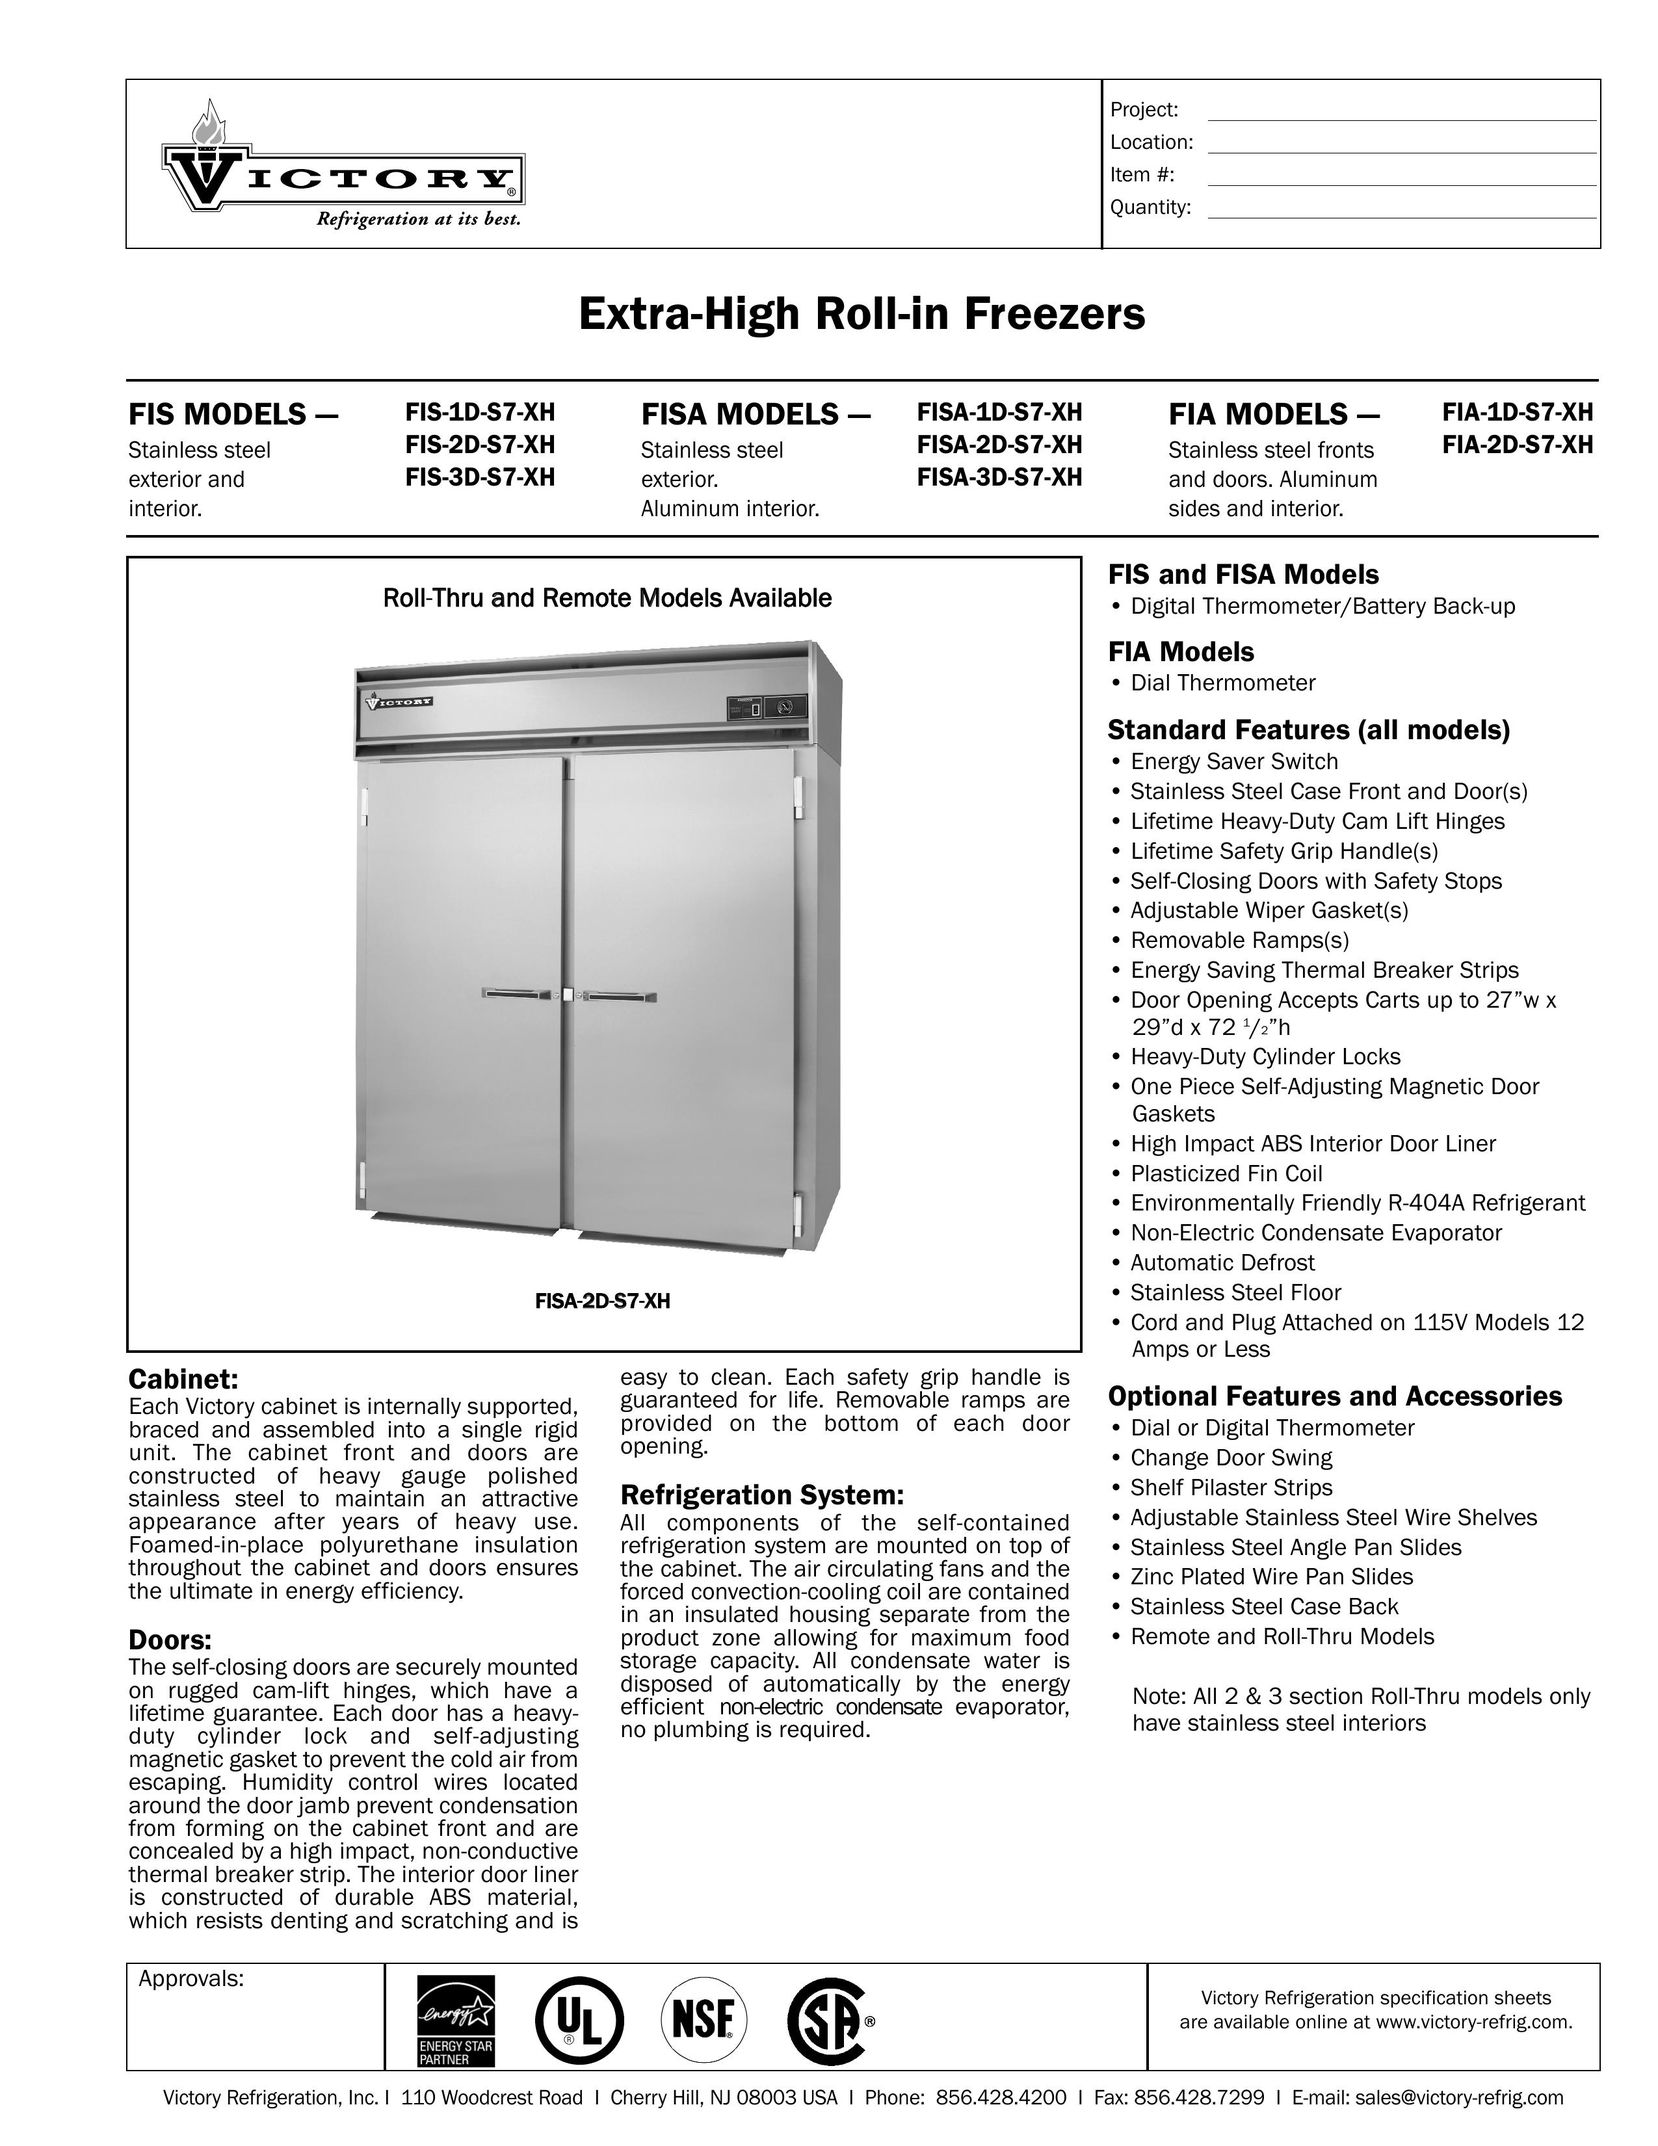 Victory Refrigeration FISA-2D-S7-XH Freezer User Manual